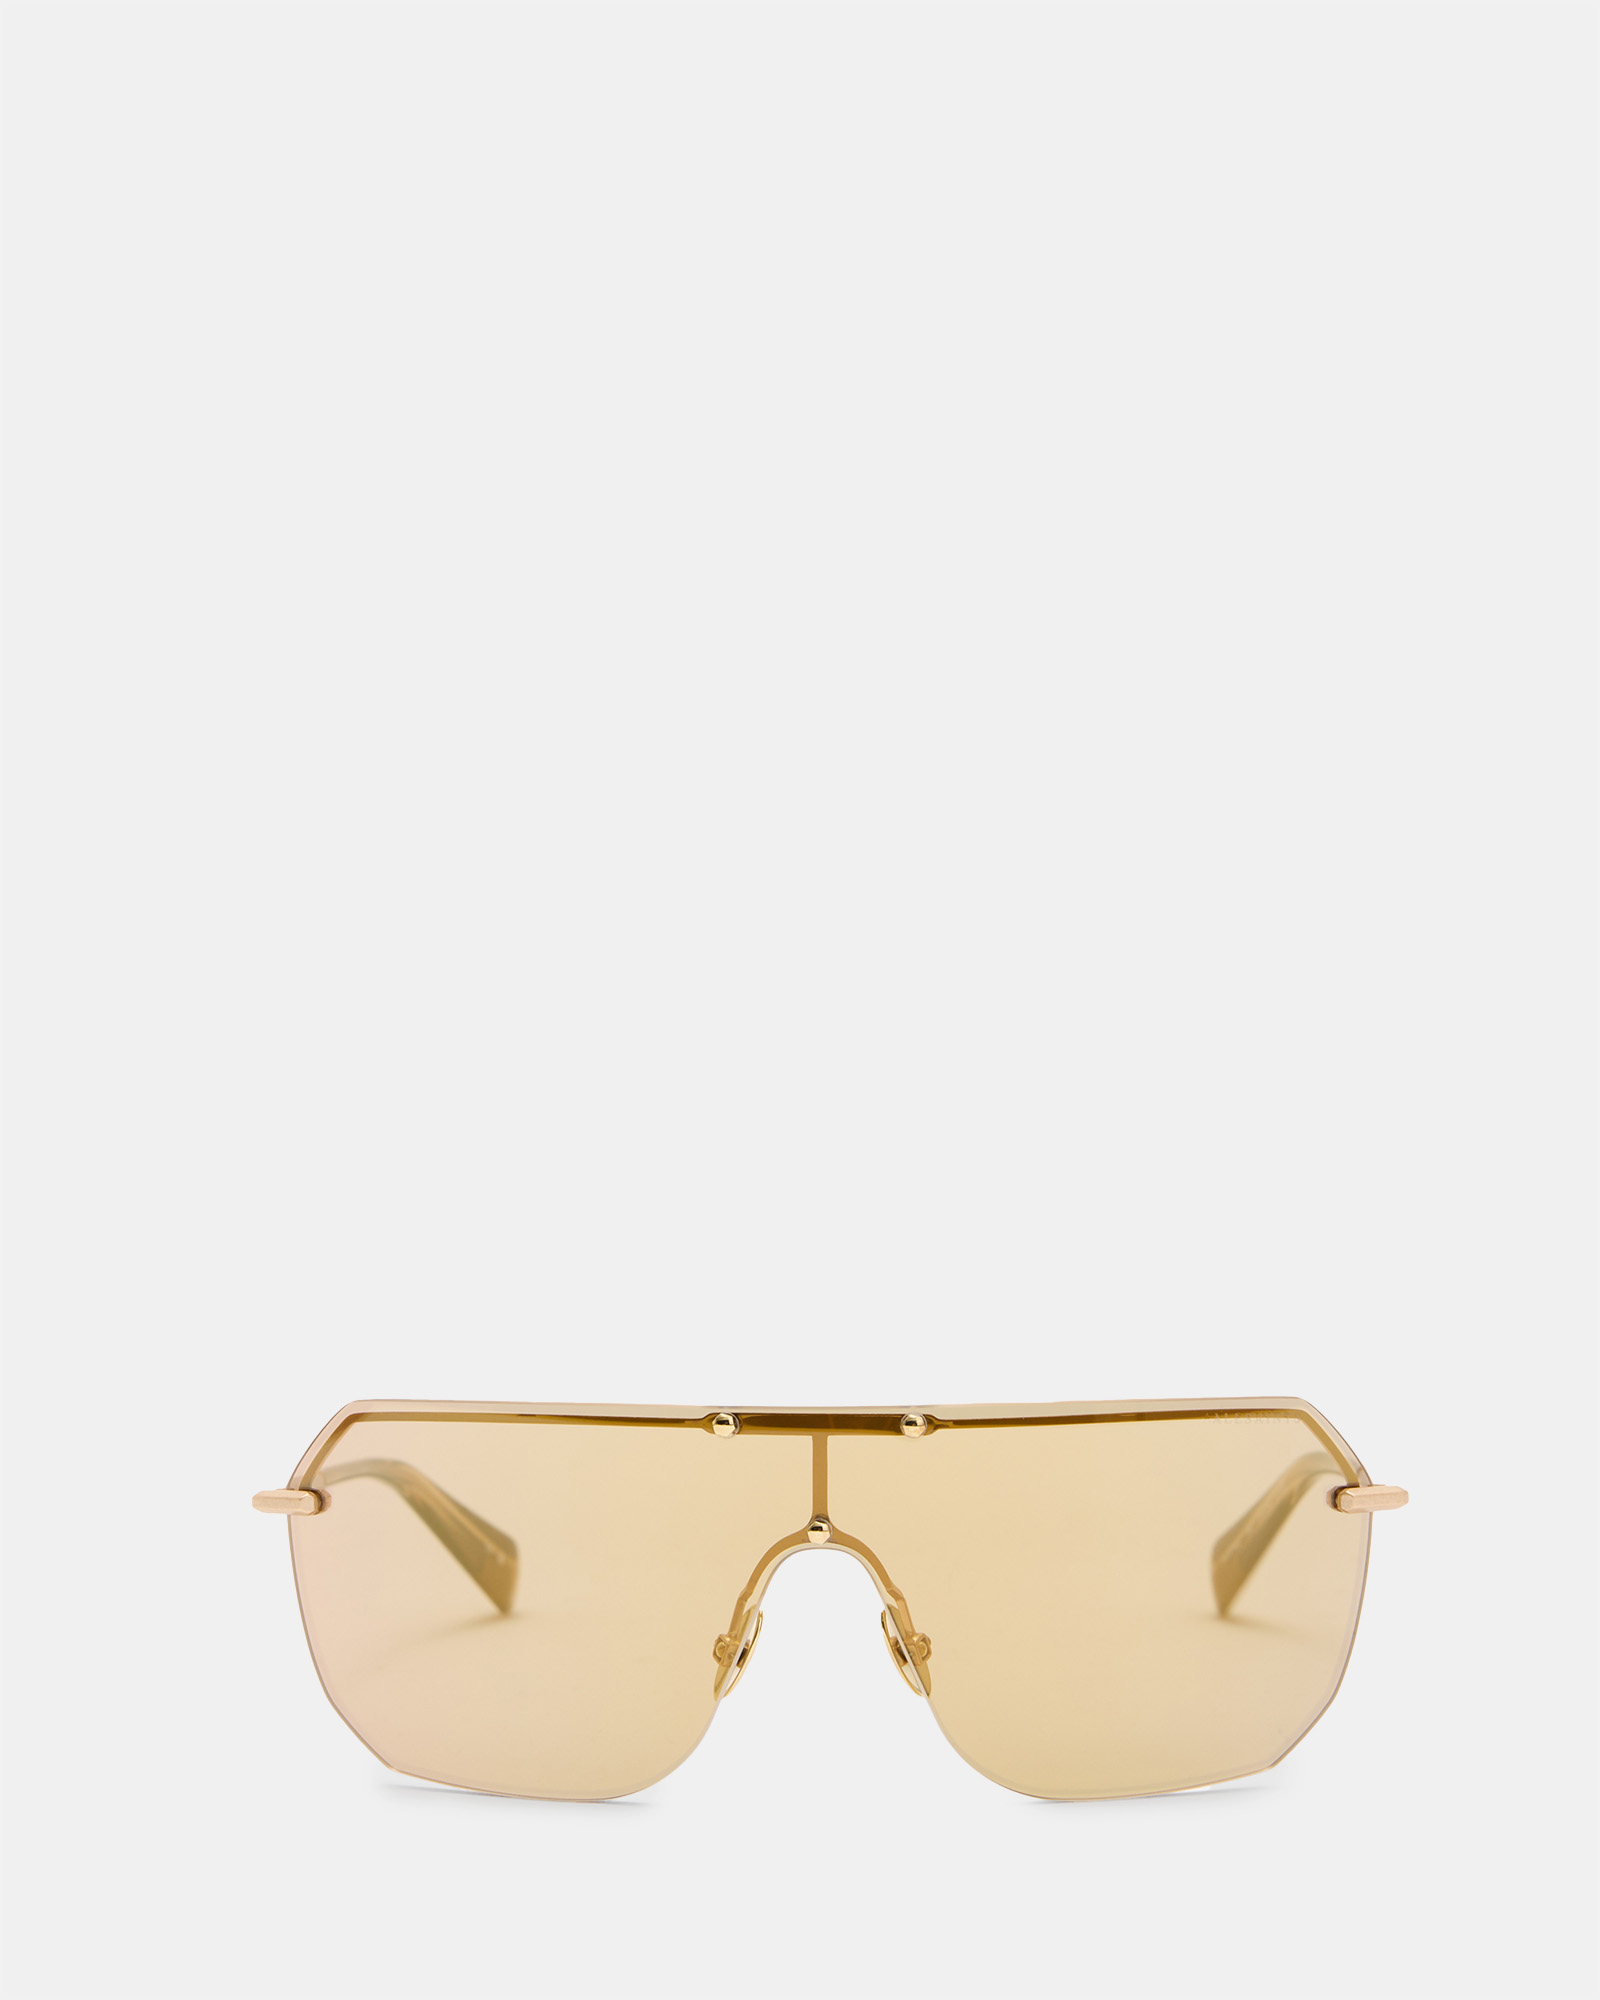 AllSaints Ace Rimless Visor Sunglasses,, MIRROR GOLD